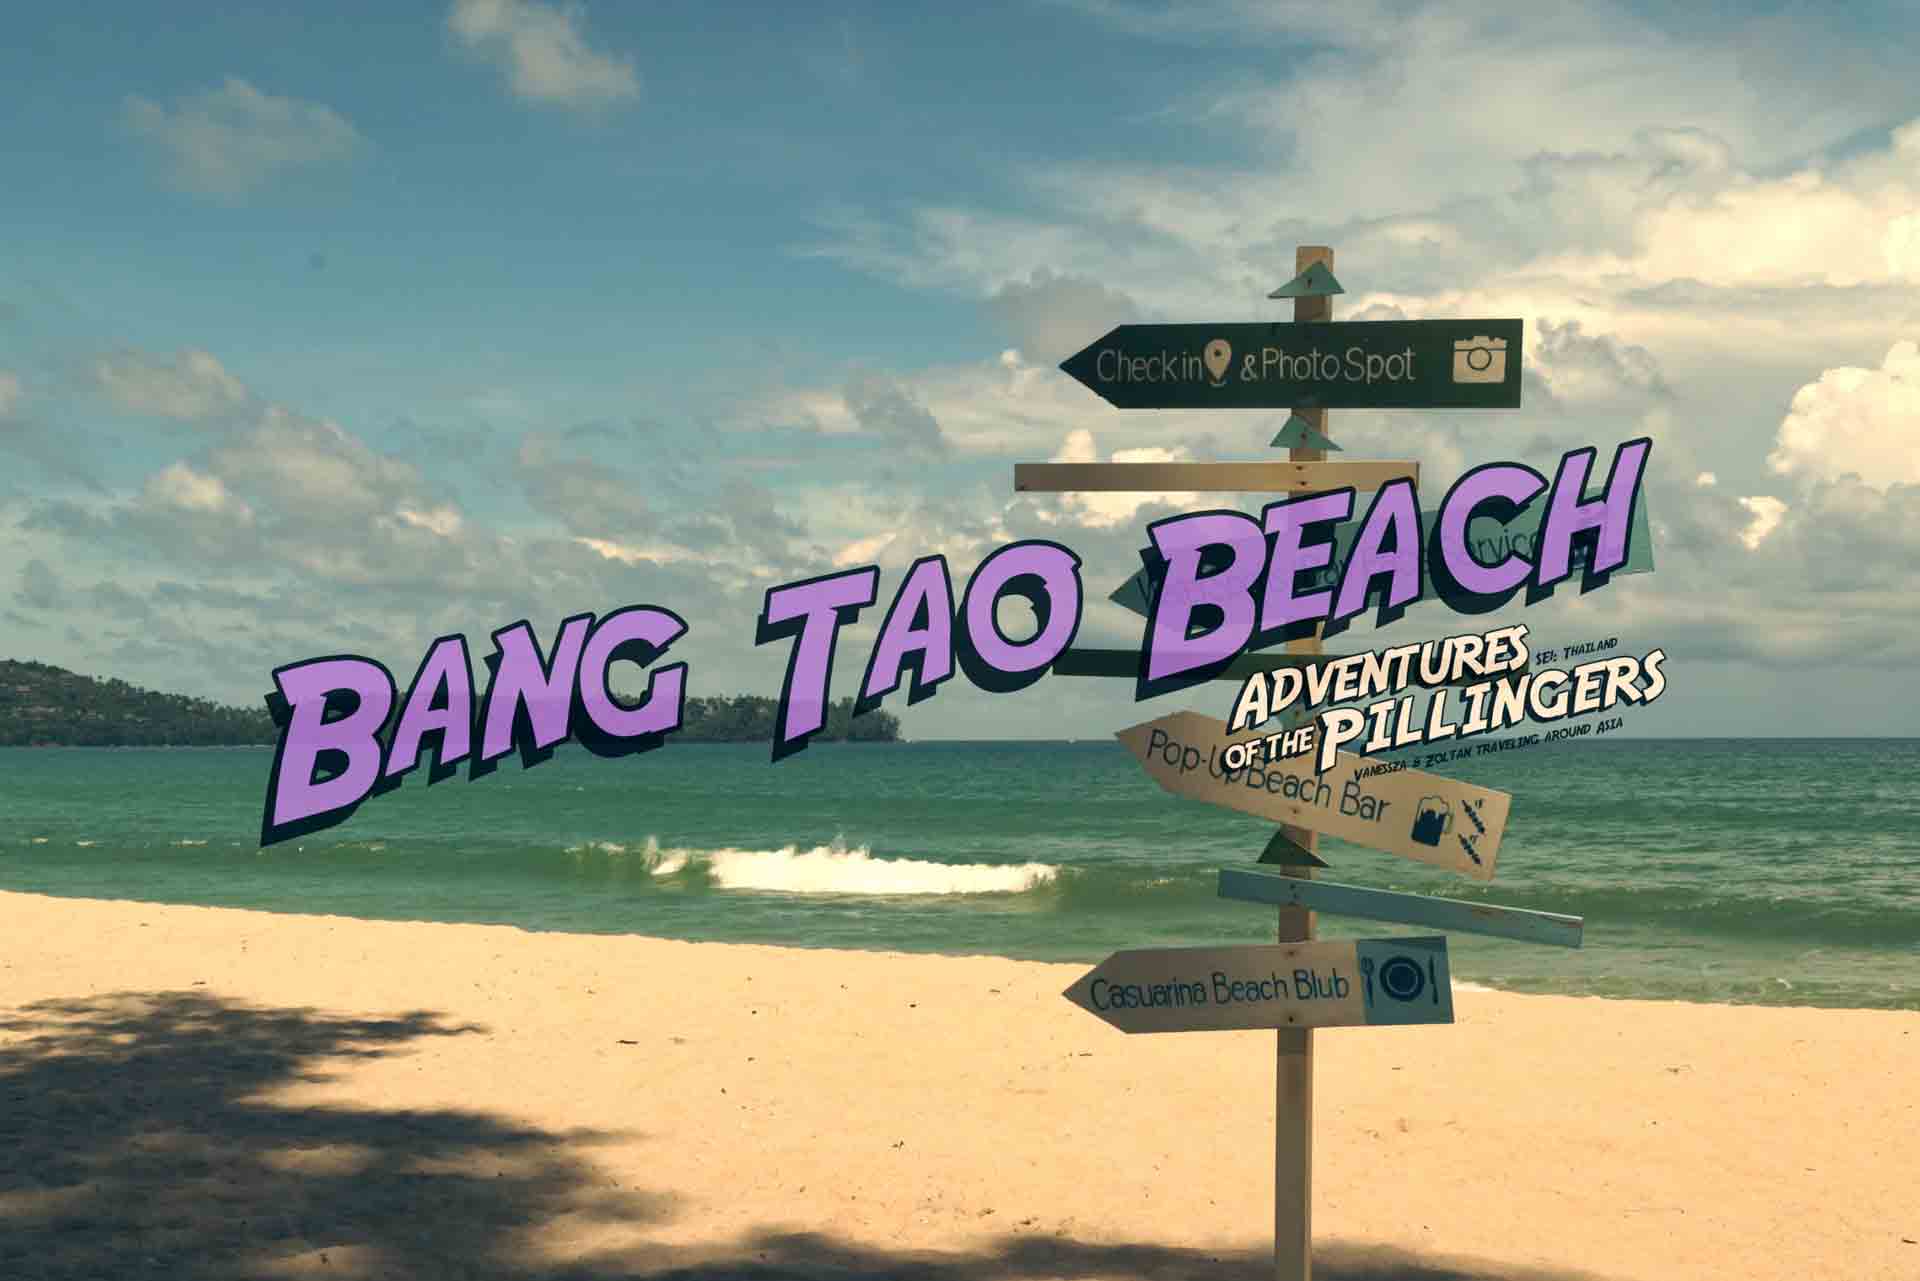 Bang Tao Beach, Phuket, Thailand, Pillingers Adventures